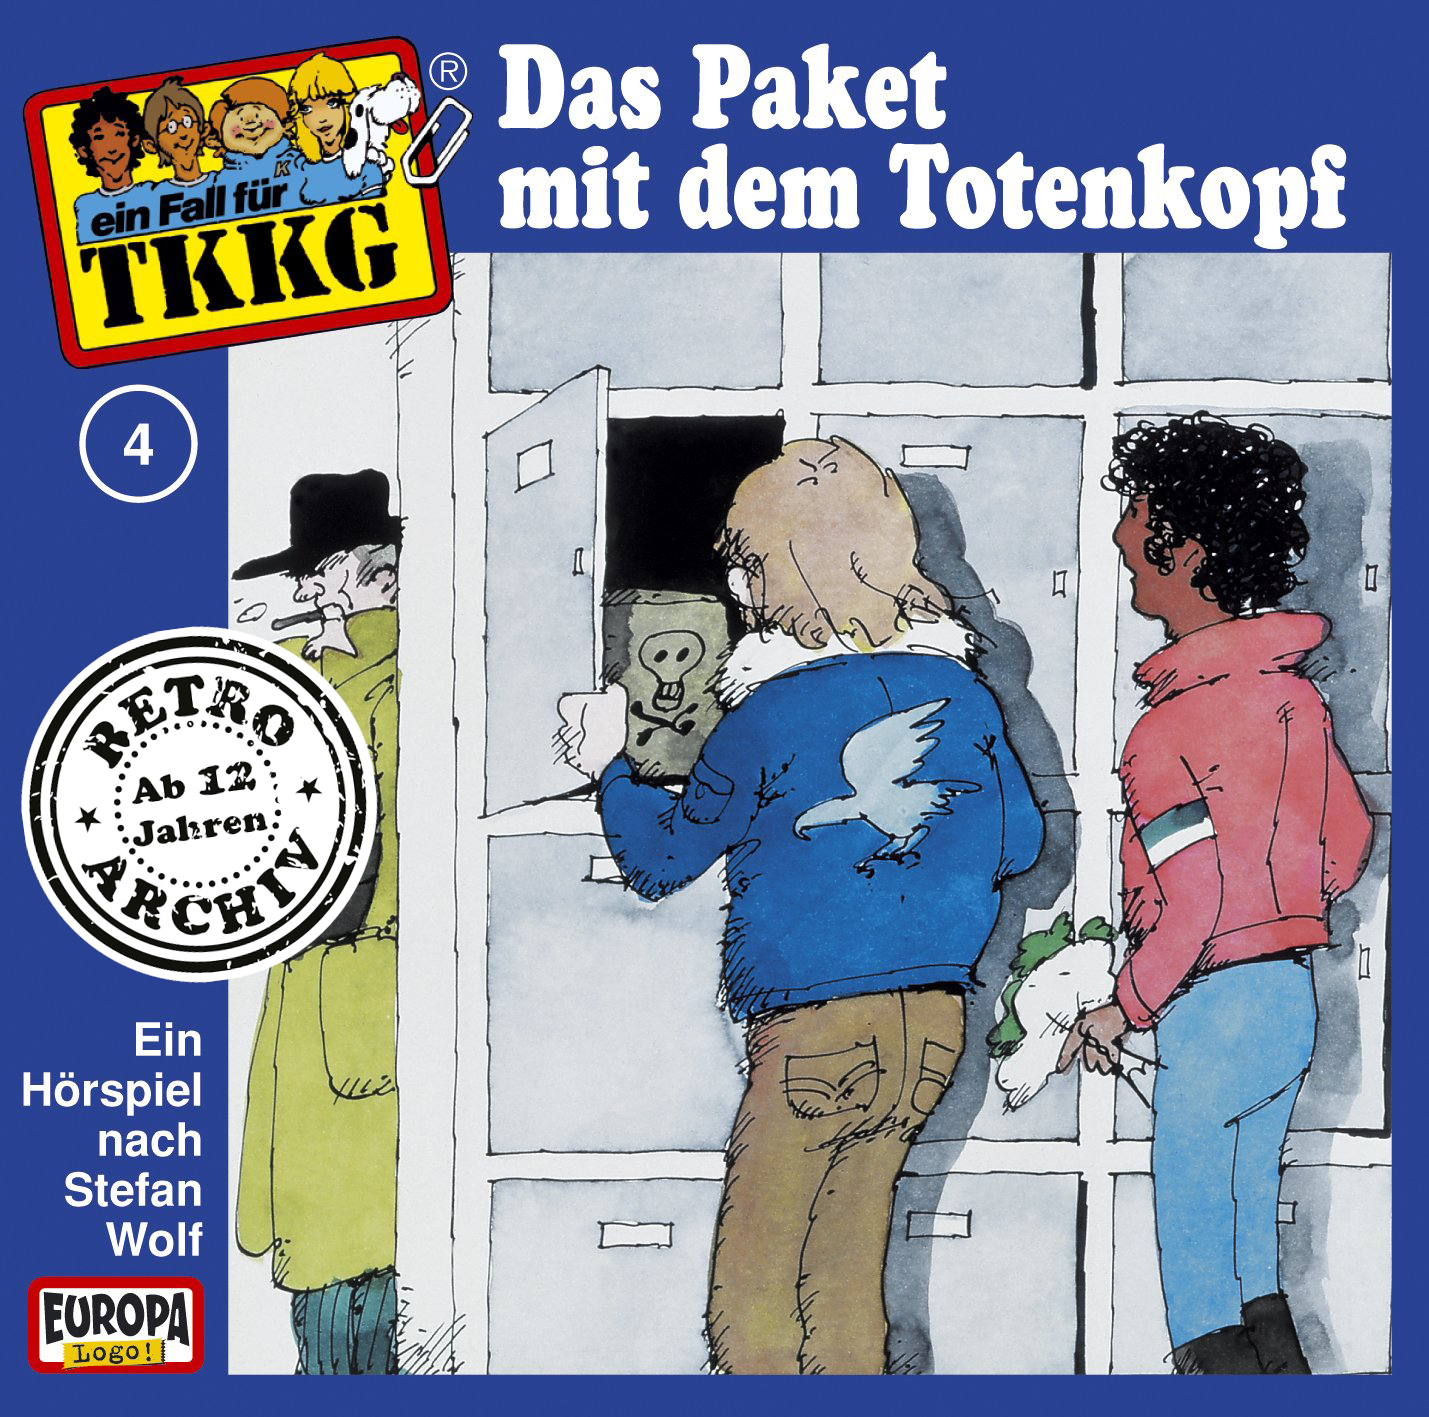 TKKG Retro-Archiv: Das Paket mit dem Totenkopf